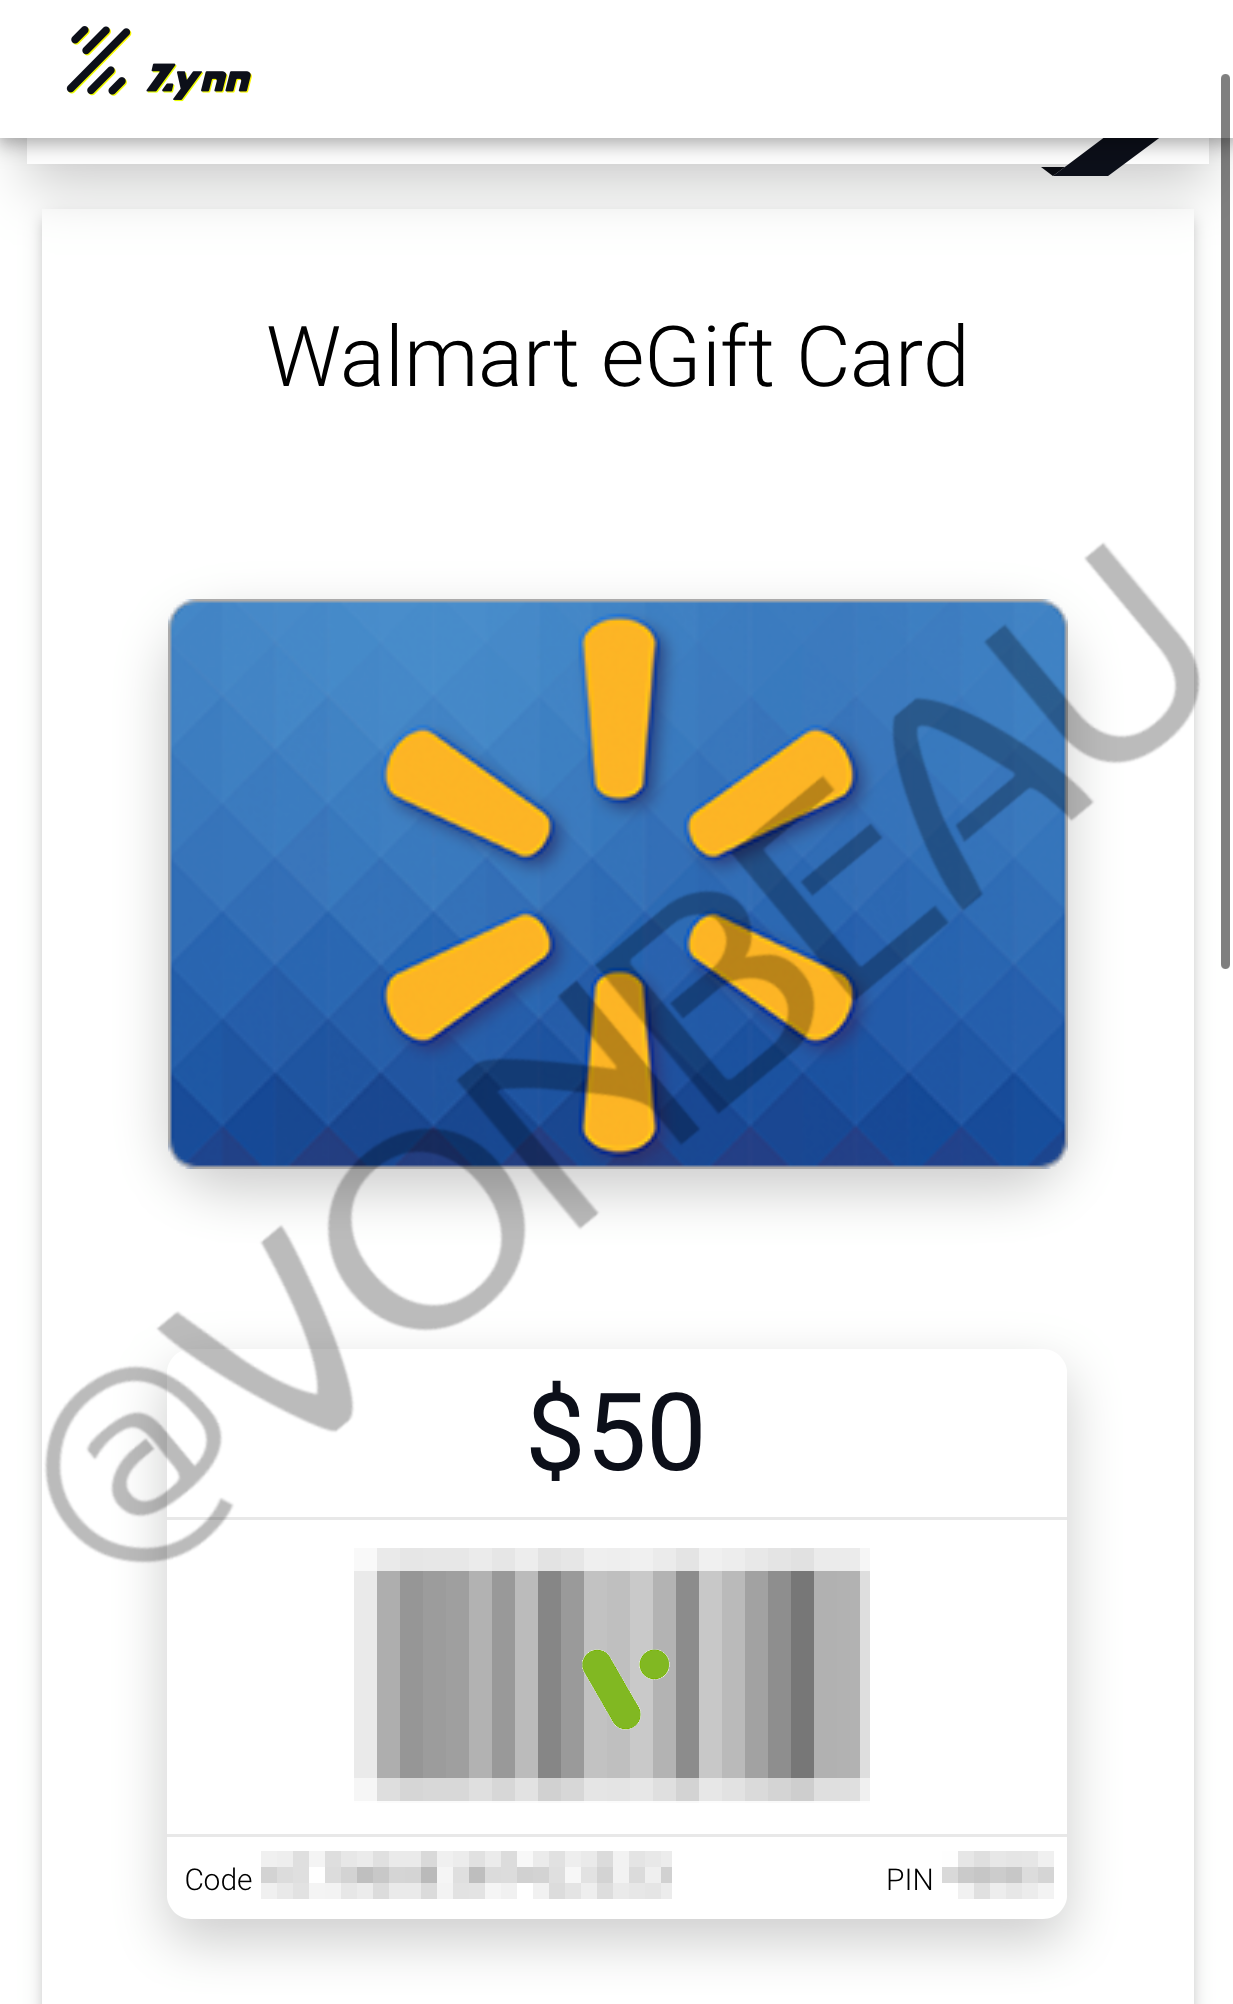 Free Walmart Gift Card from Zynn App